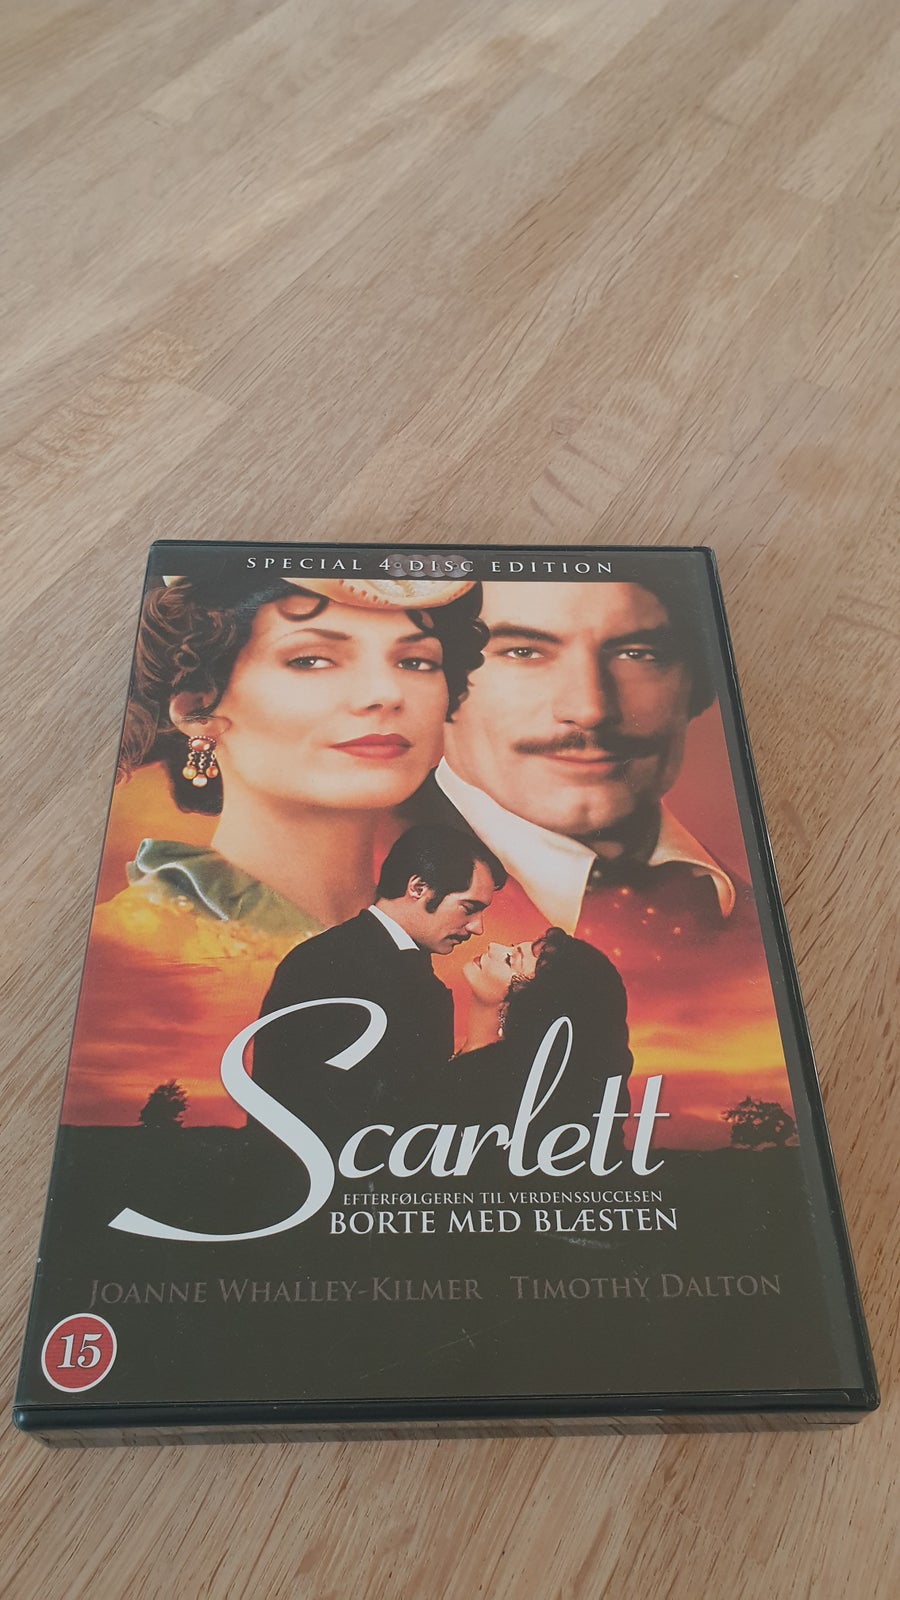 Scarlett DVD 1994 Timothy Dalton Joanne Whalley Kilmer